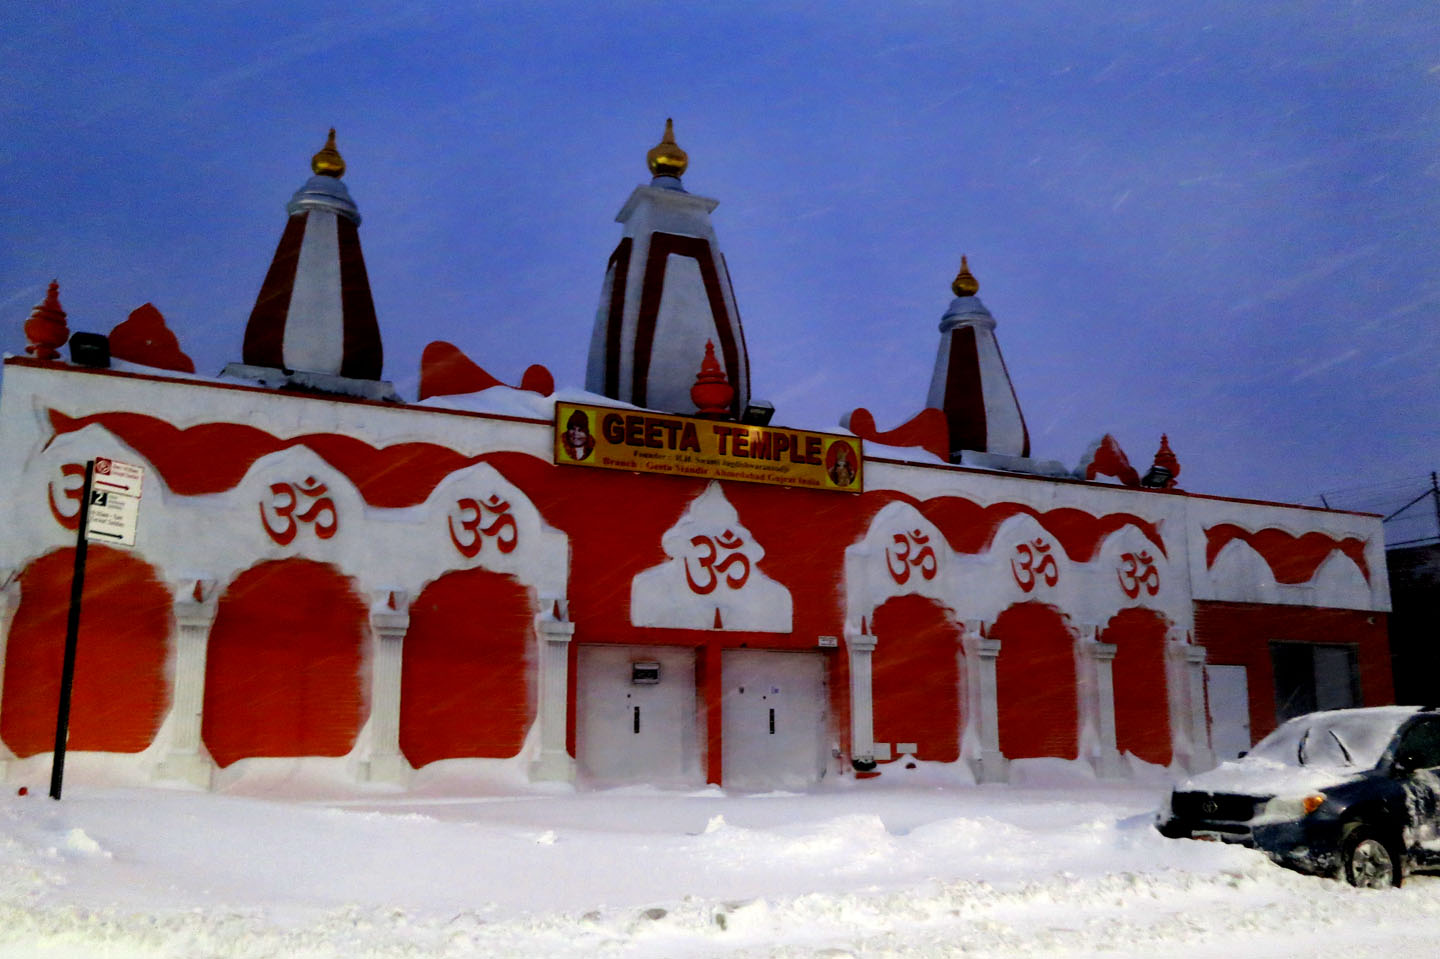 Geeta Hindu Temple, Elmhurst-Corona, Queens › A Journey ...